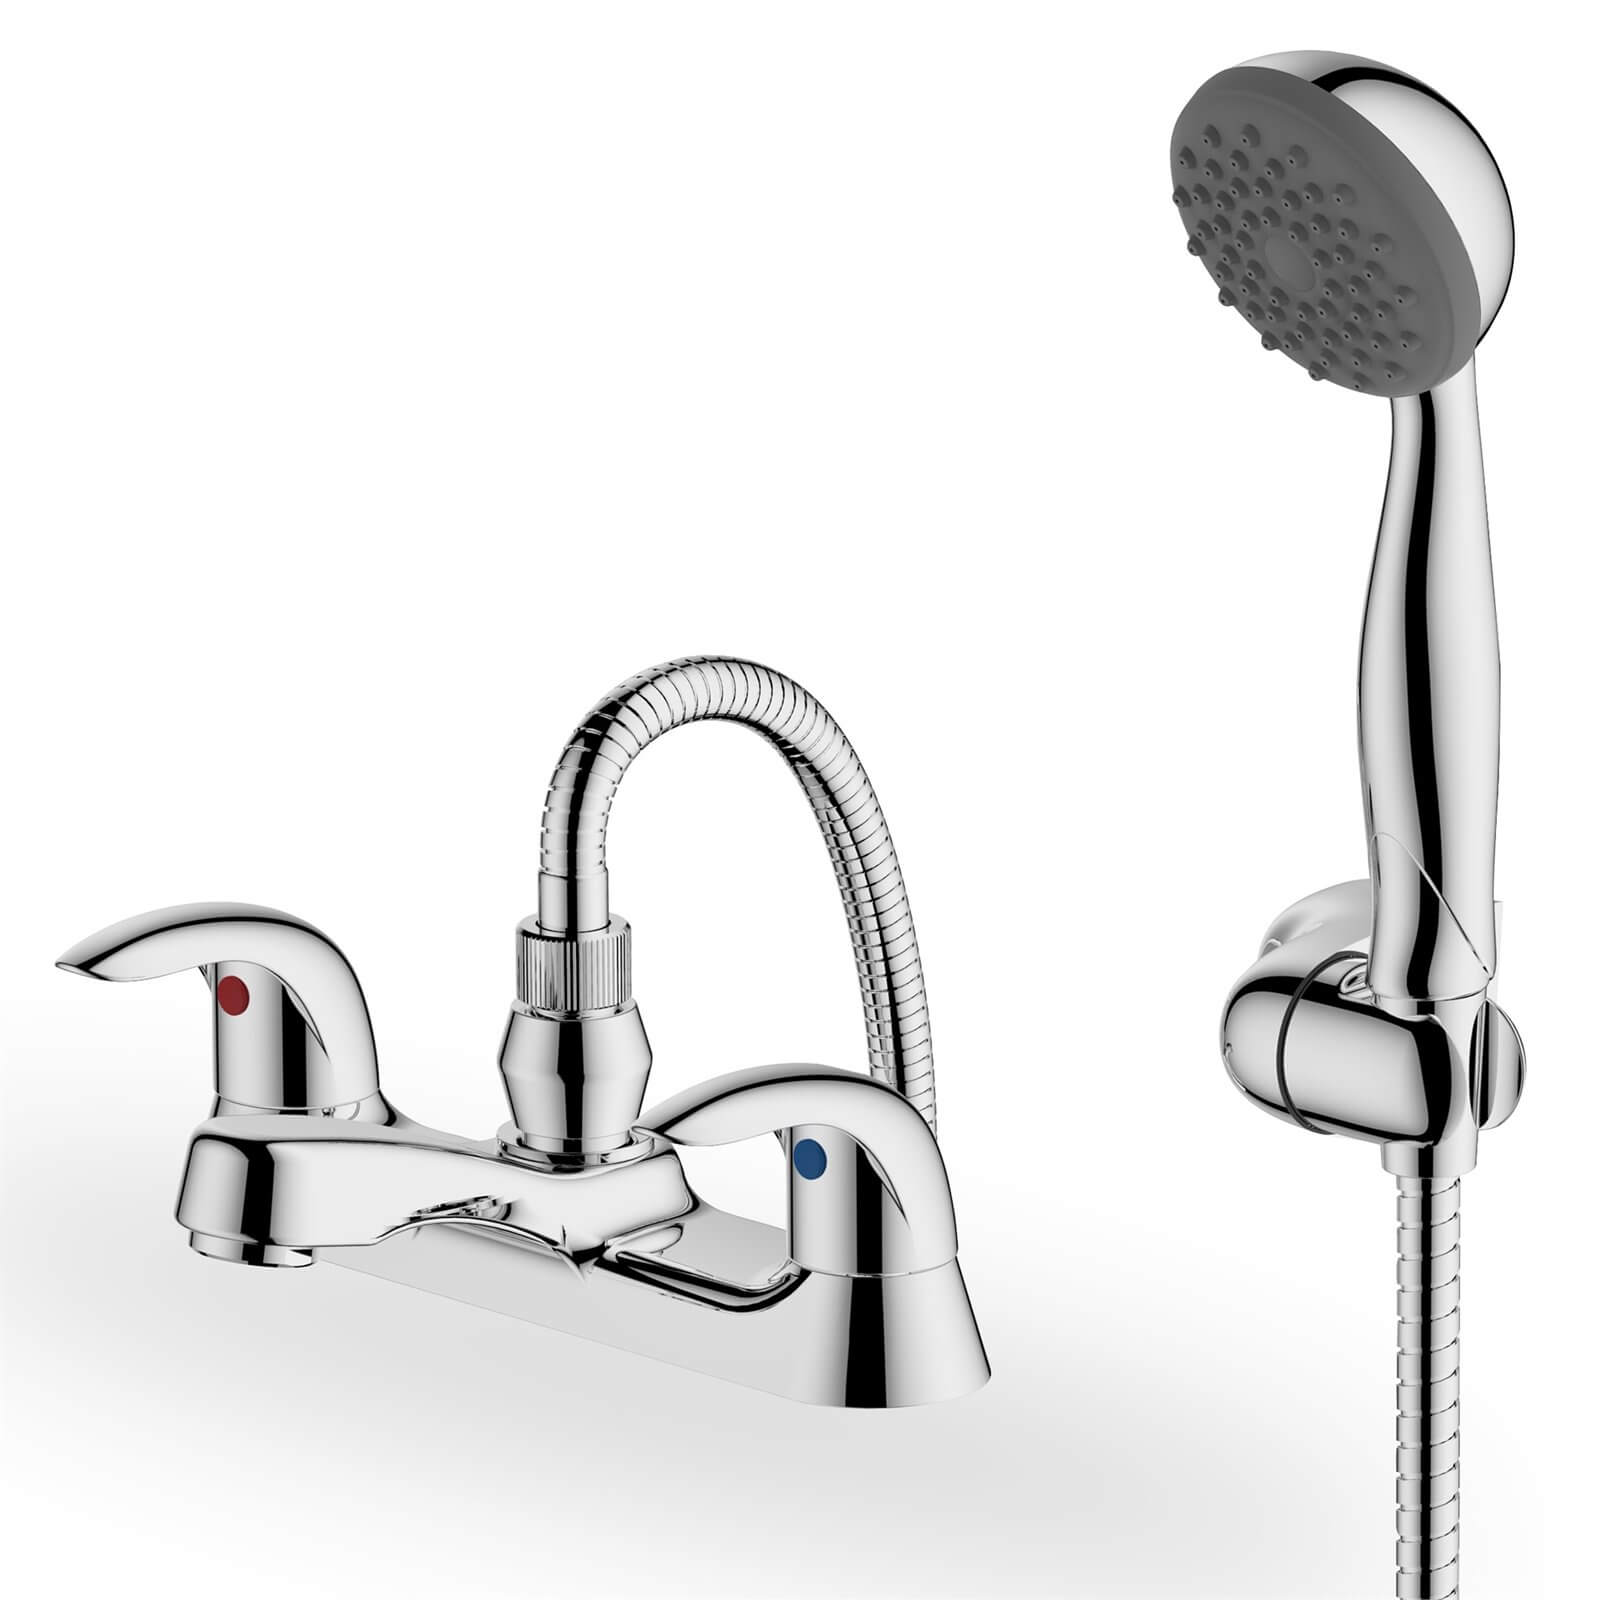 Lodore Bath Shower Mixer Tap - Chrome